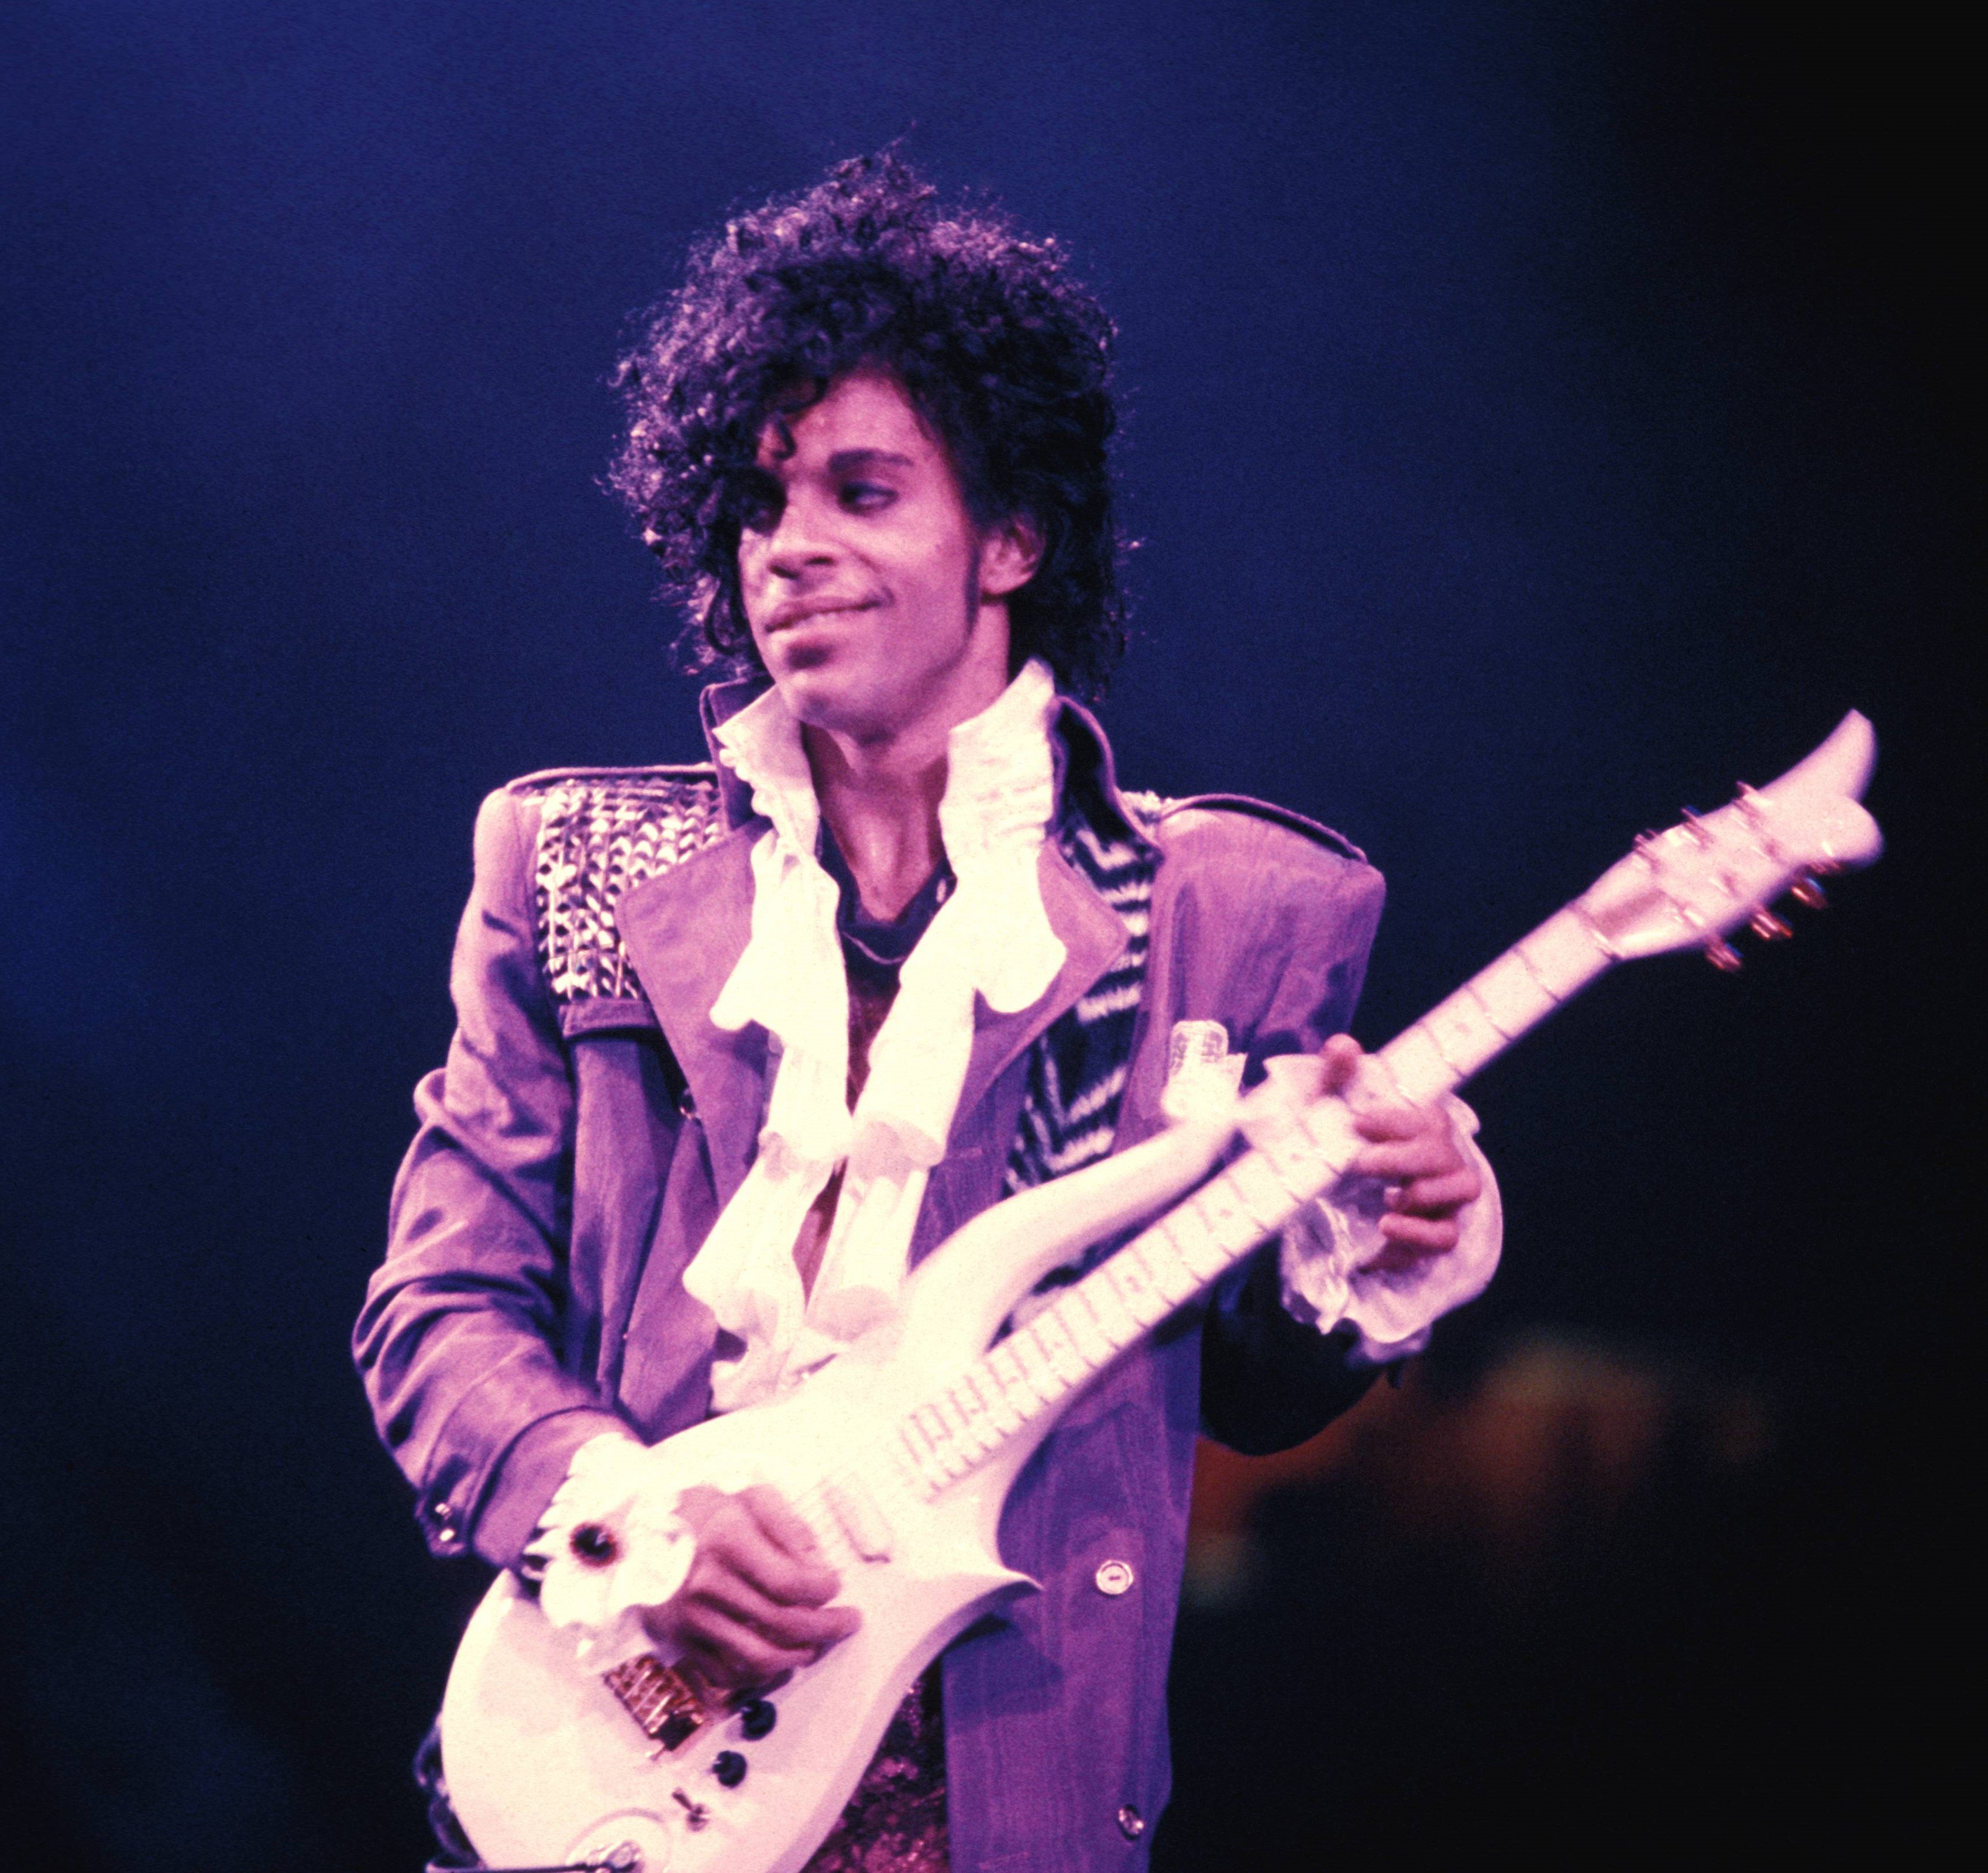 "Raspberry Beret" singer Prince wearing purple